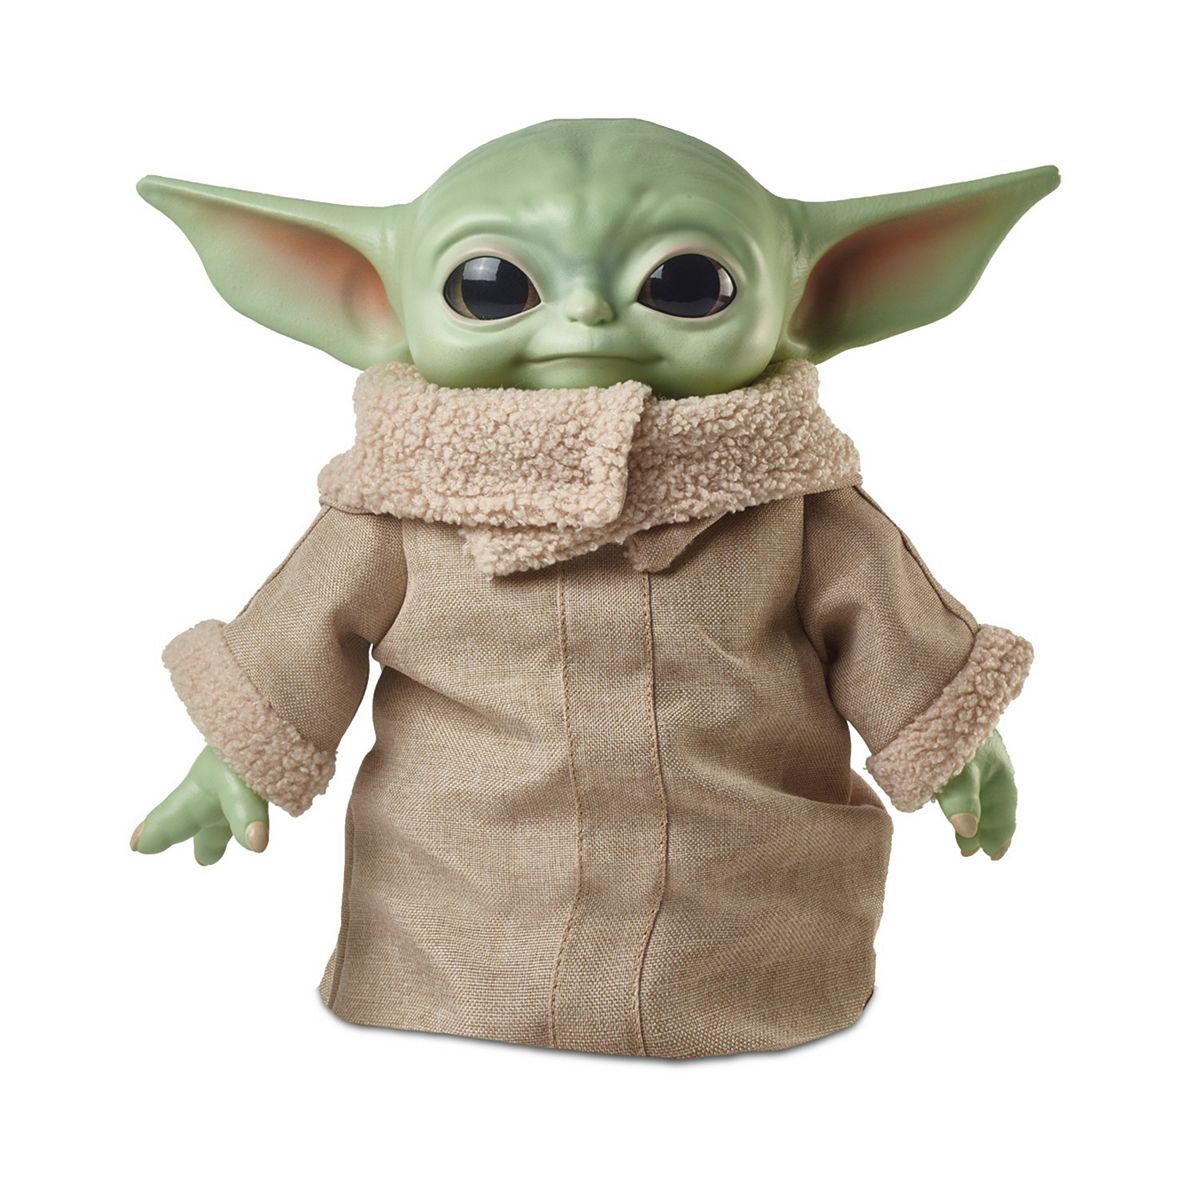 11" Star Wars The Mandalorian: The Child aka Baby Yoda (Grogu) Toy Plush Figure $9.10 + Free Shipping on $49+